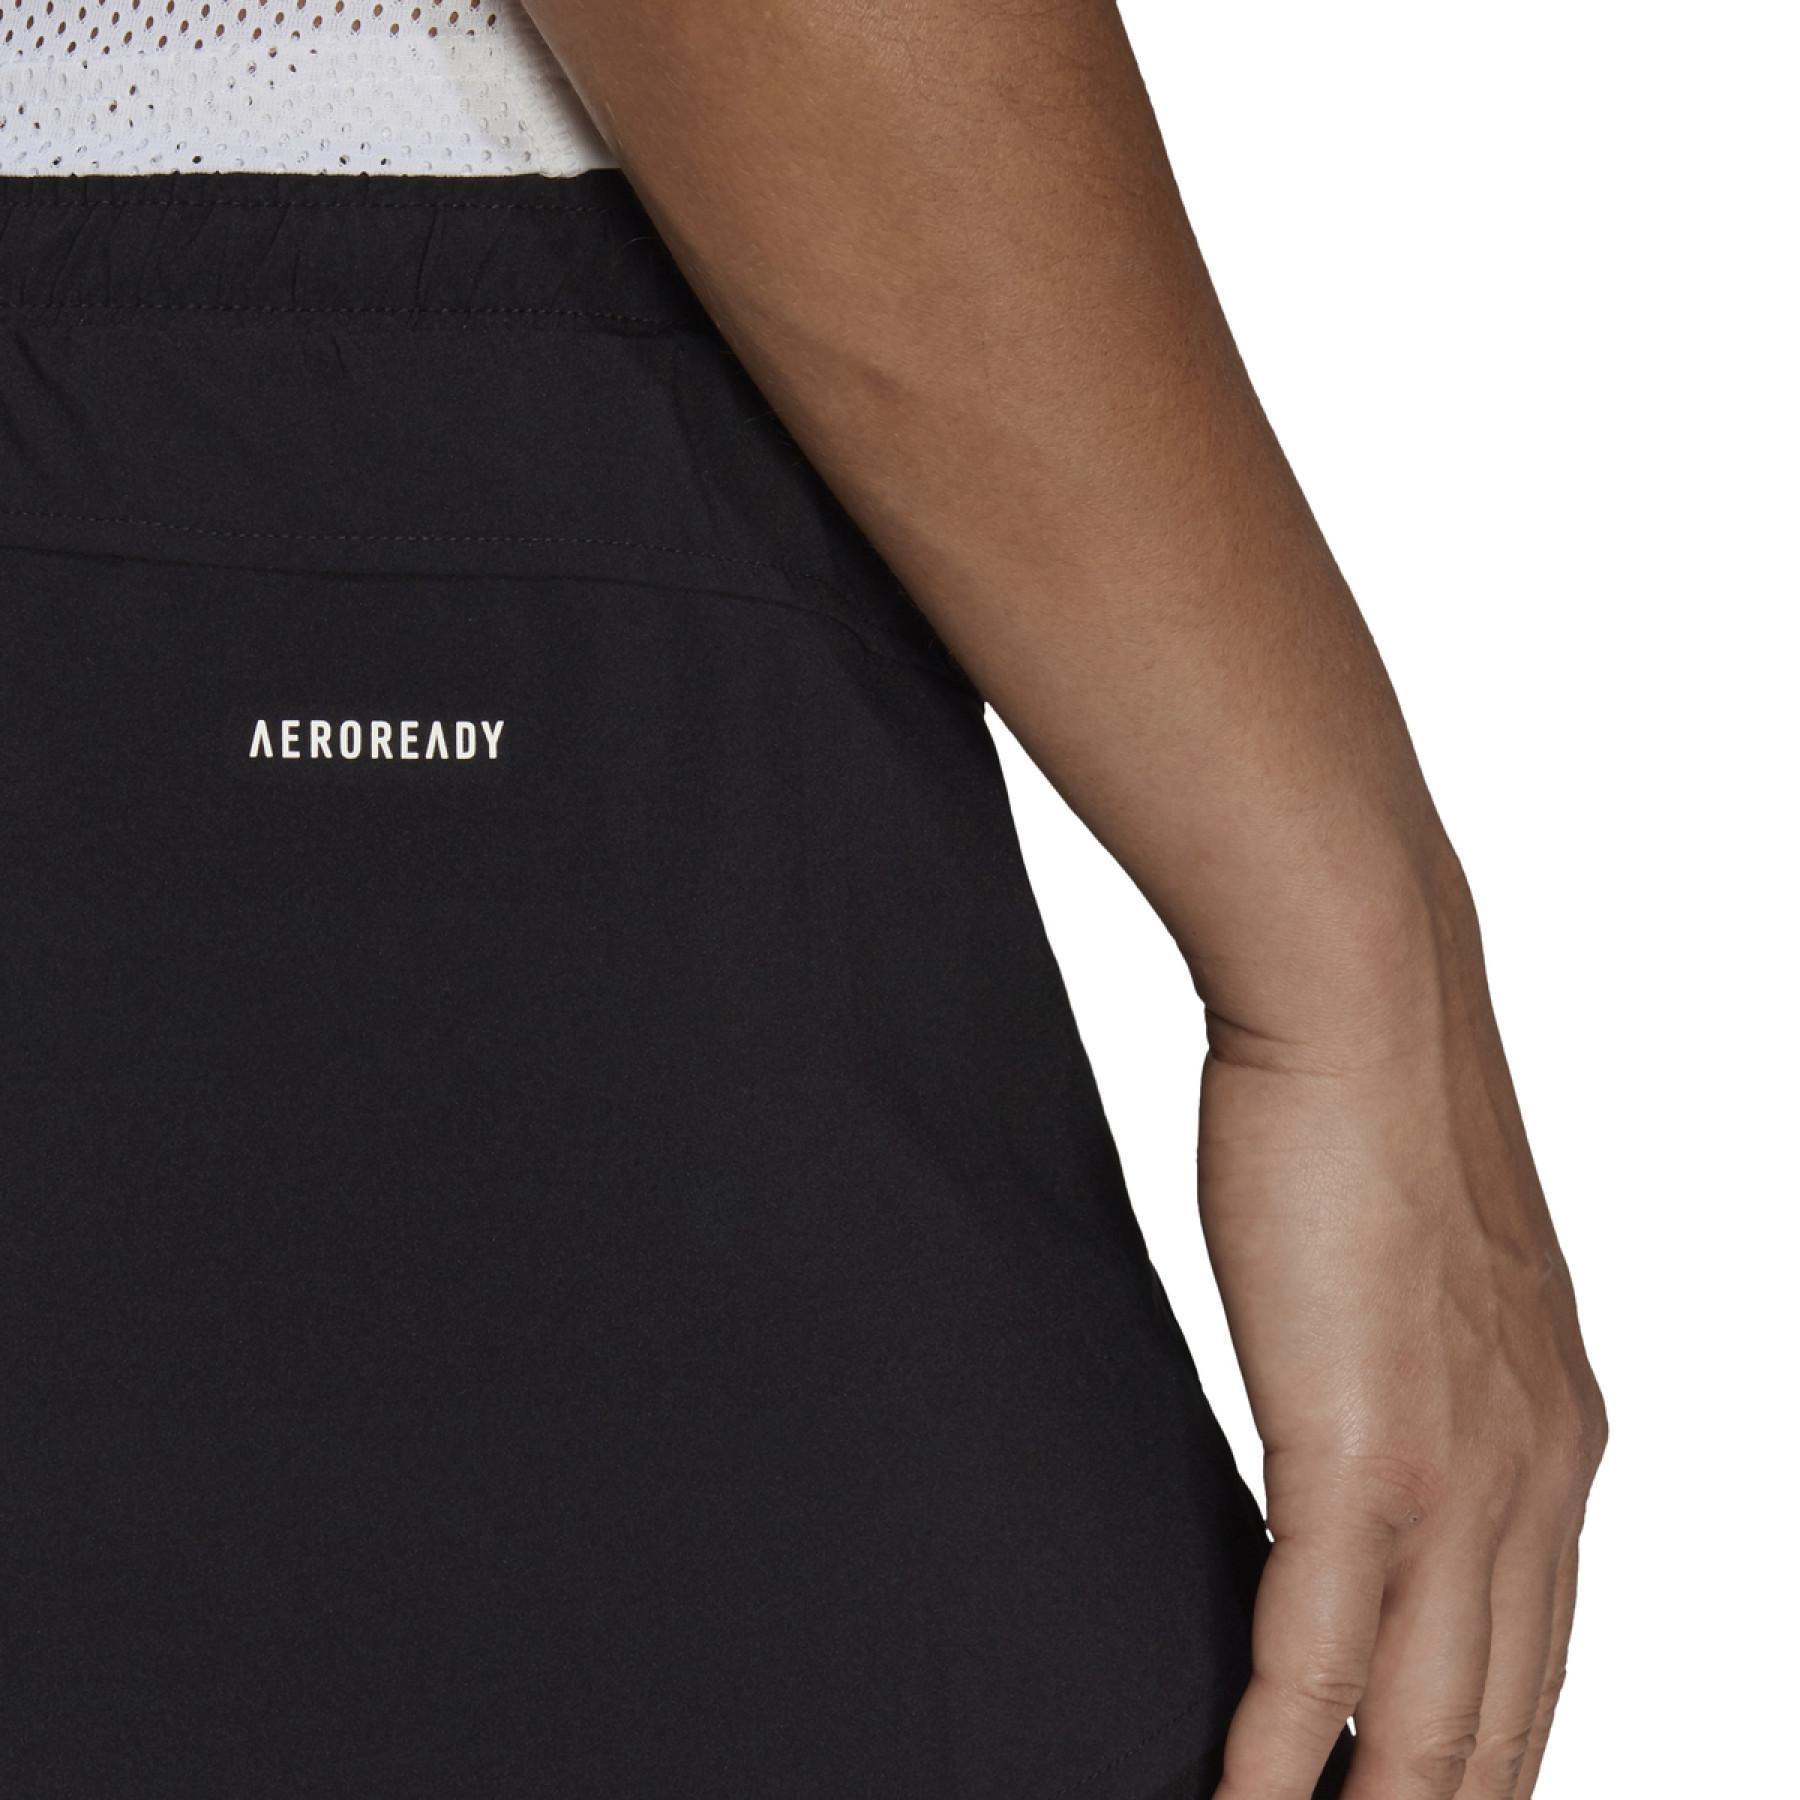 Damen-Shorts adidas Primeblue Designed To Move 2-in-1port